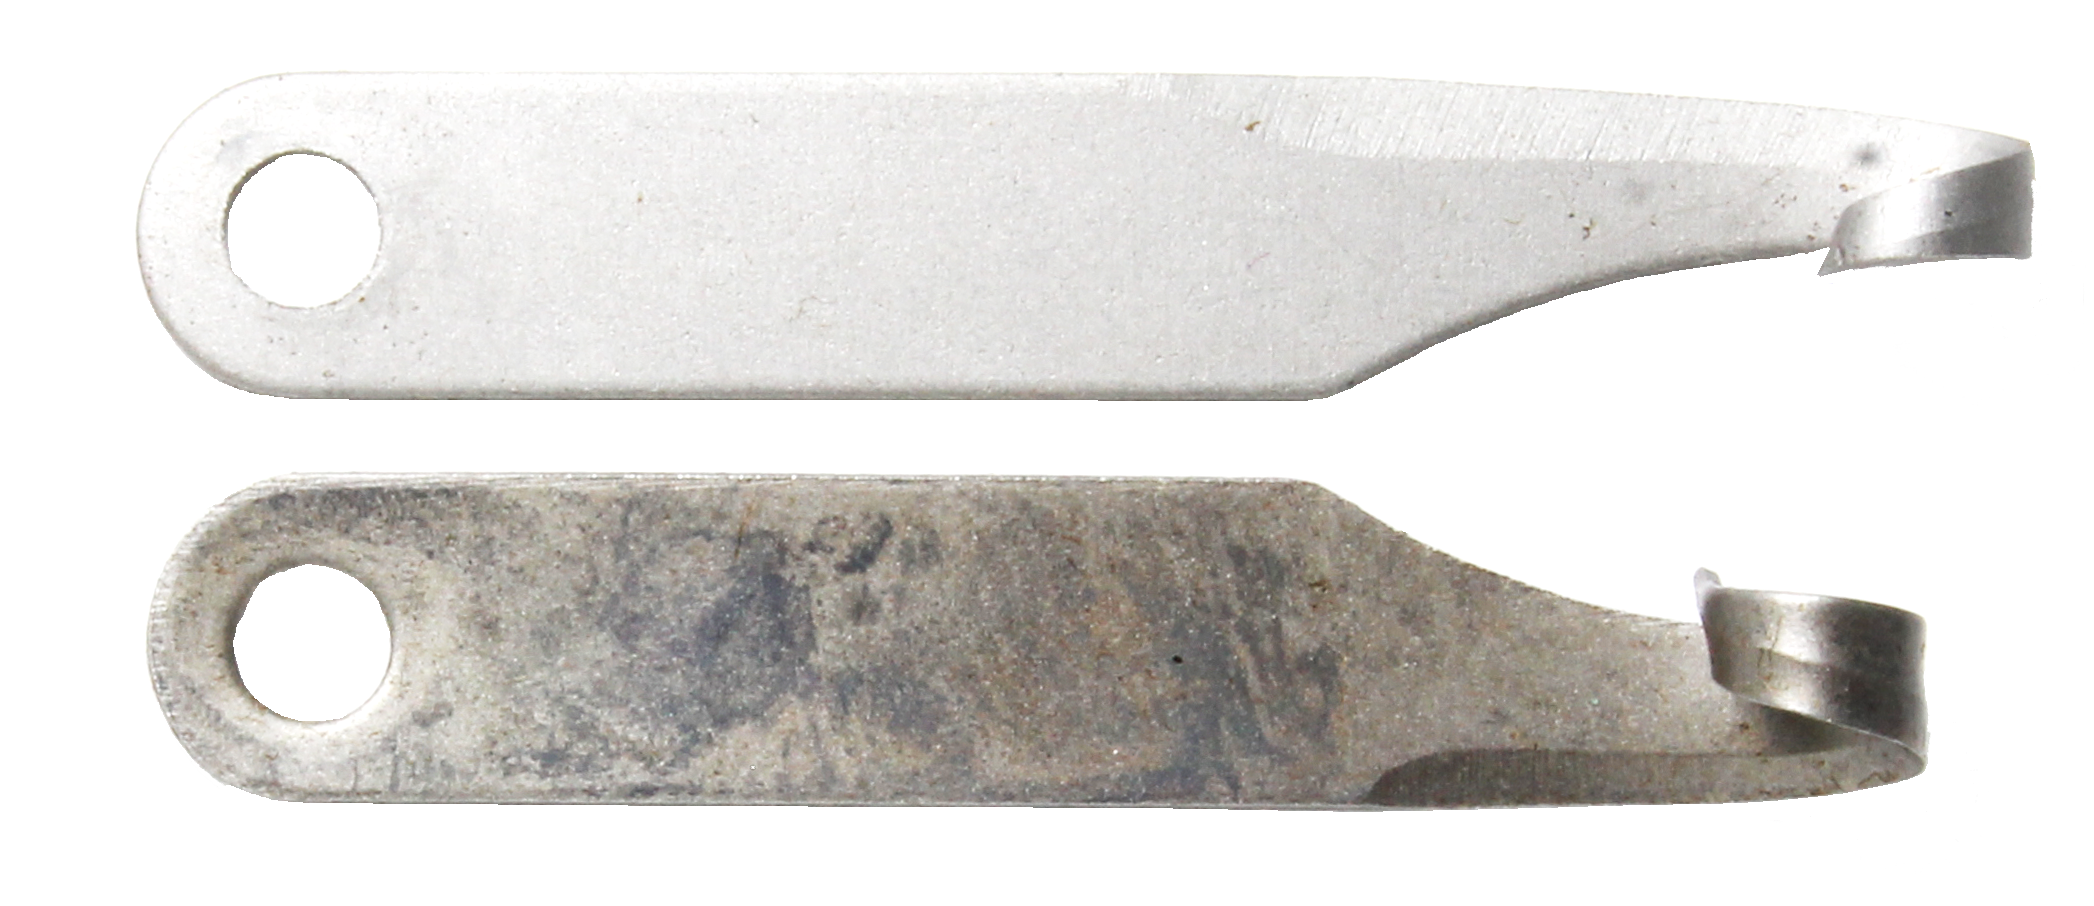 794: Small 3/16' Radius Carving Blades